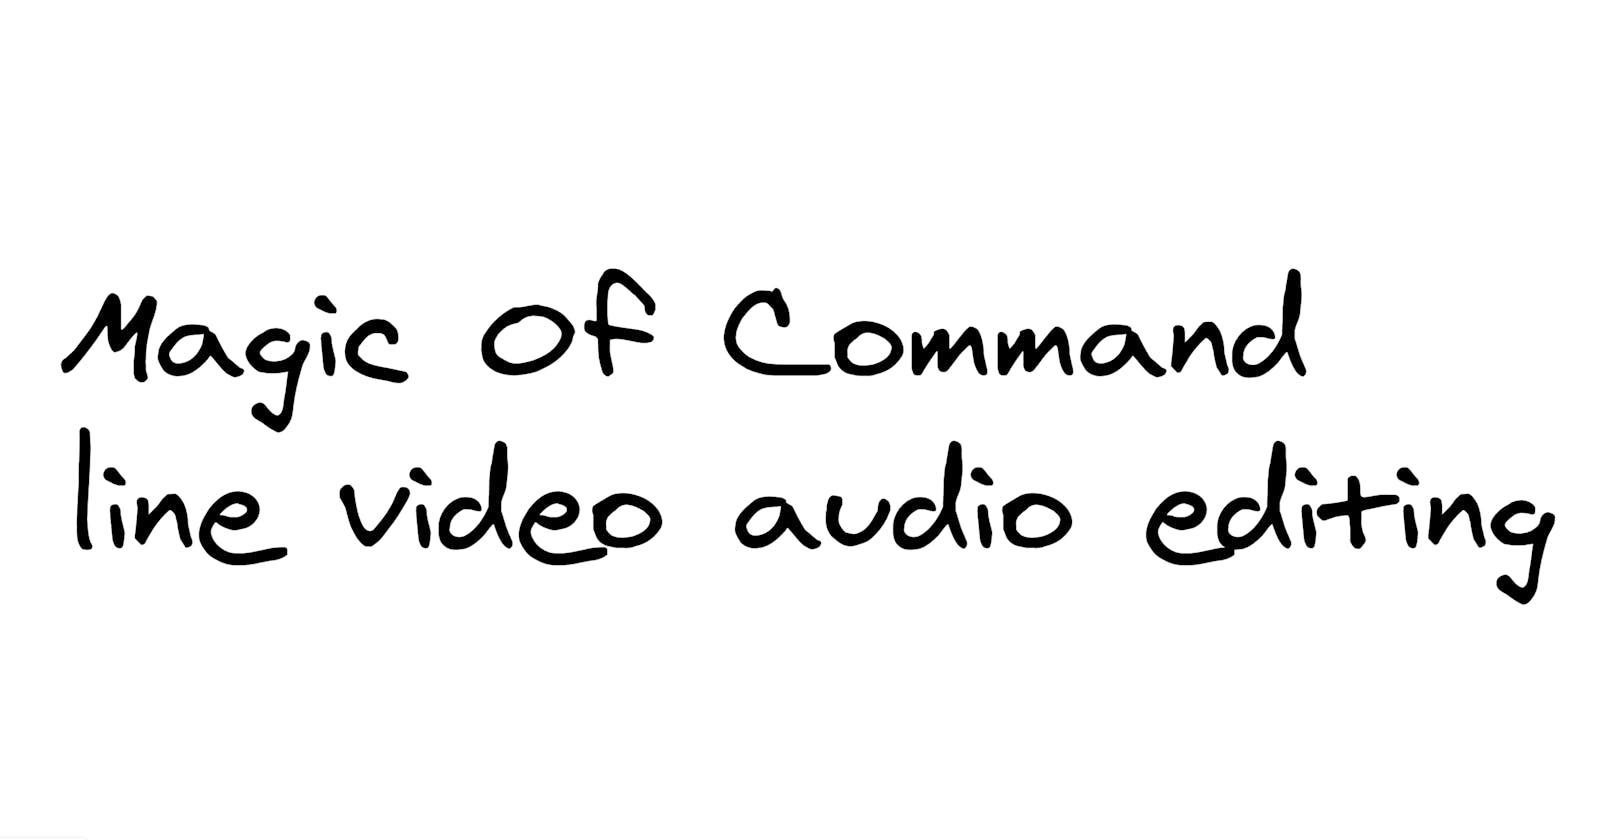 Magic of Command Line Video Audio Editing Tools